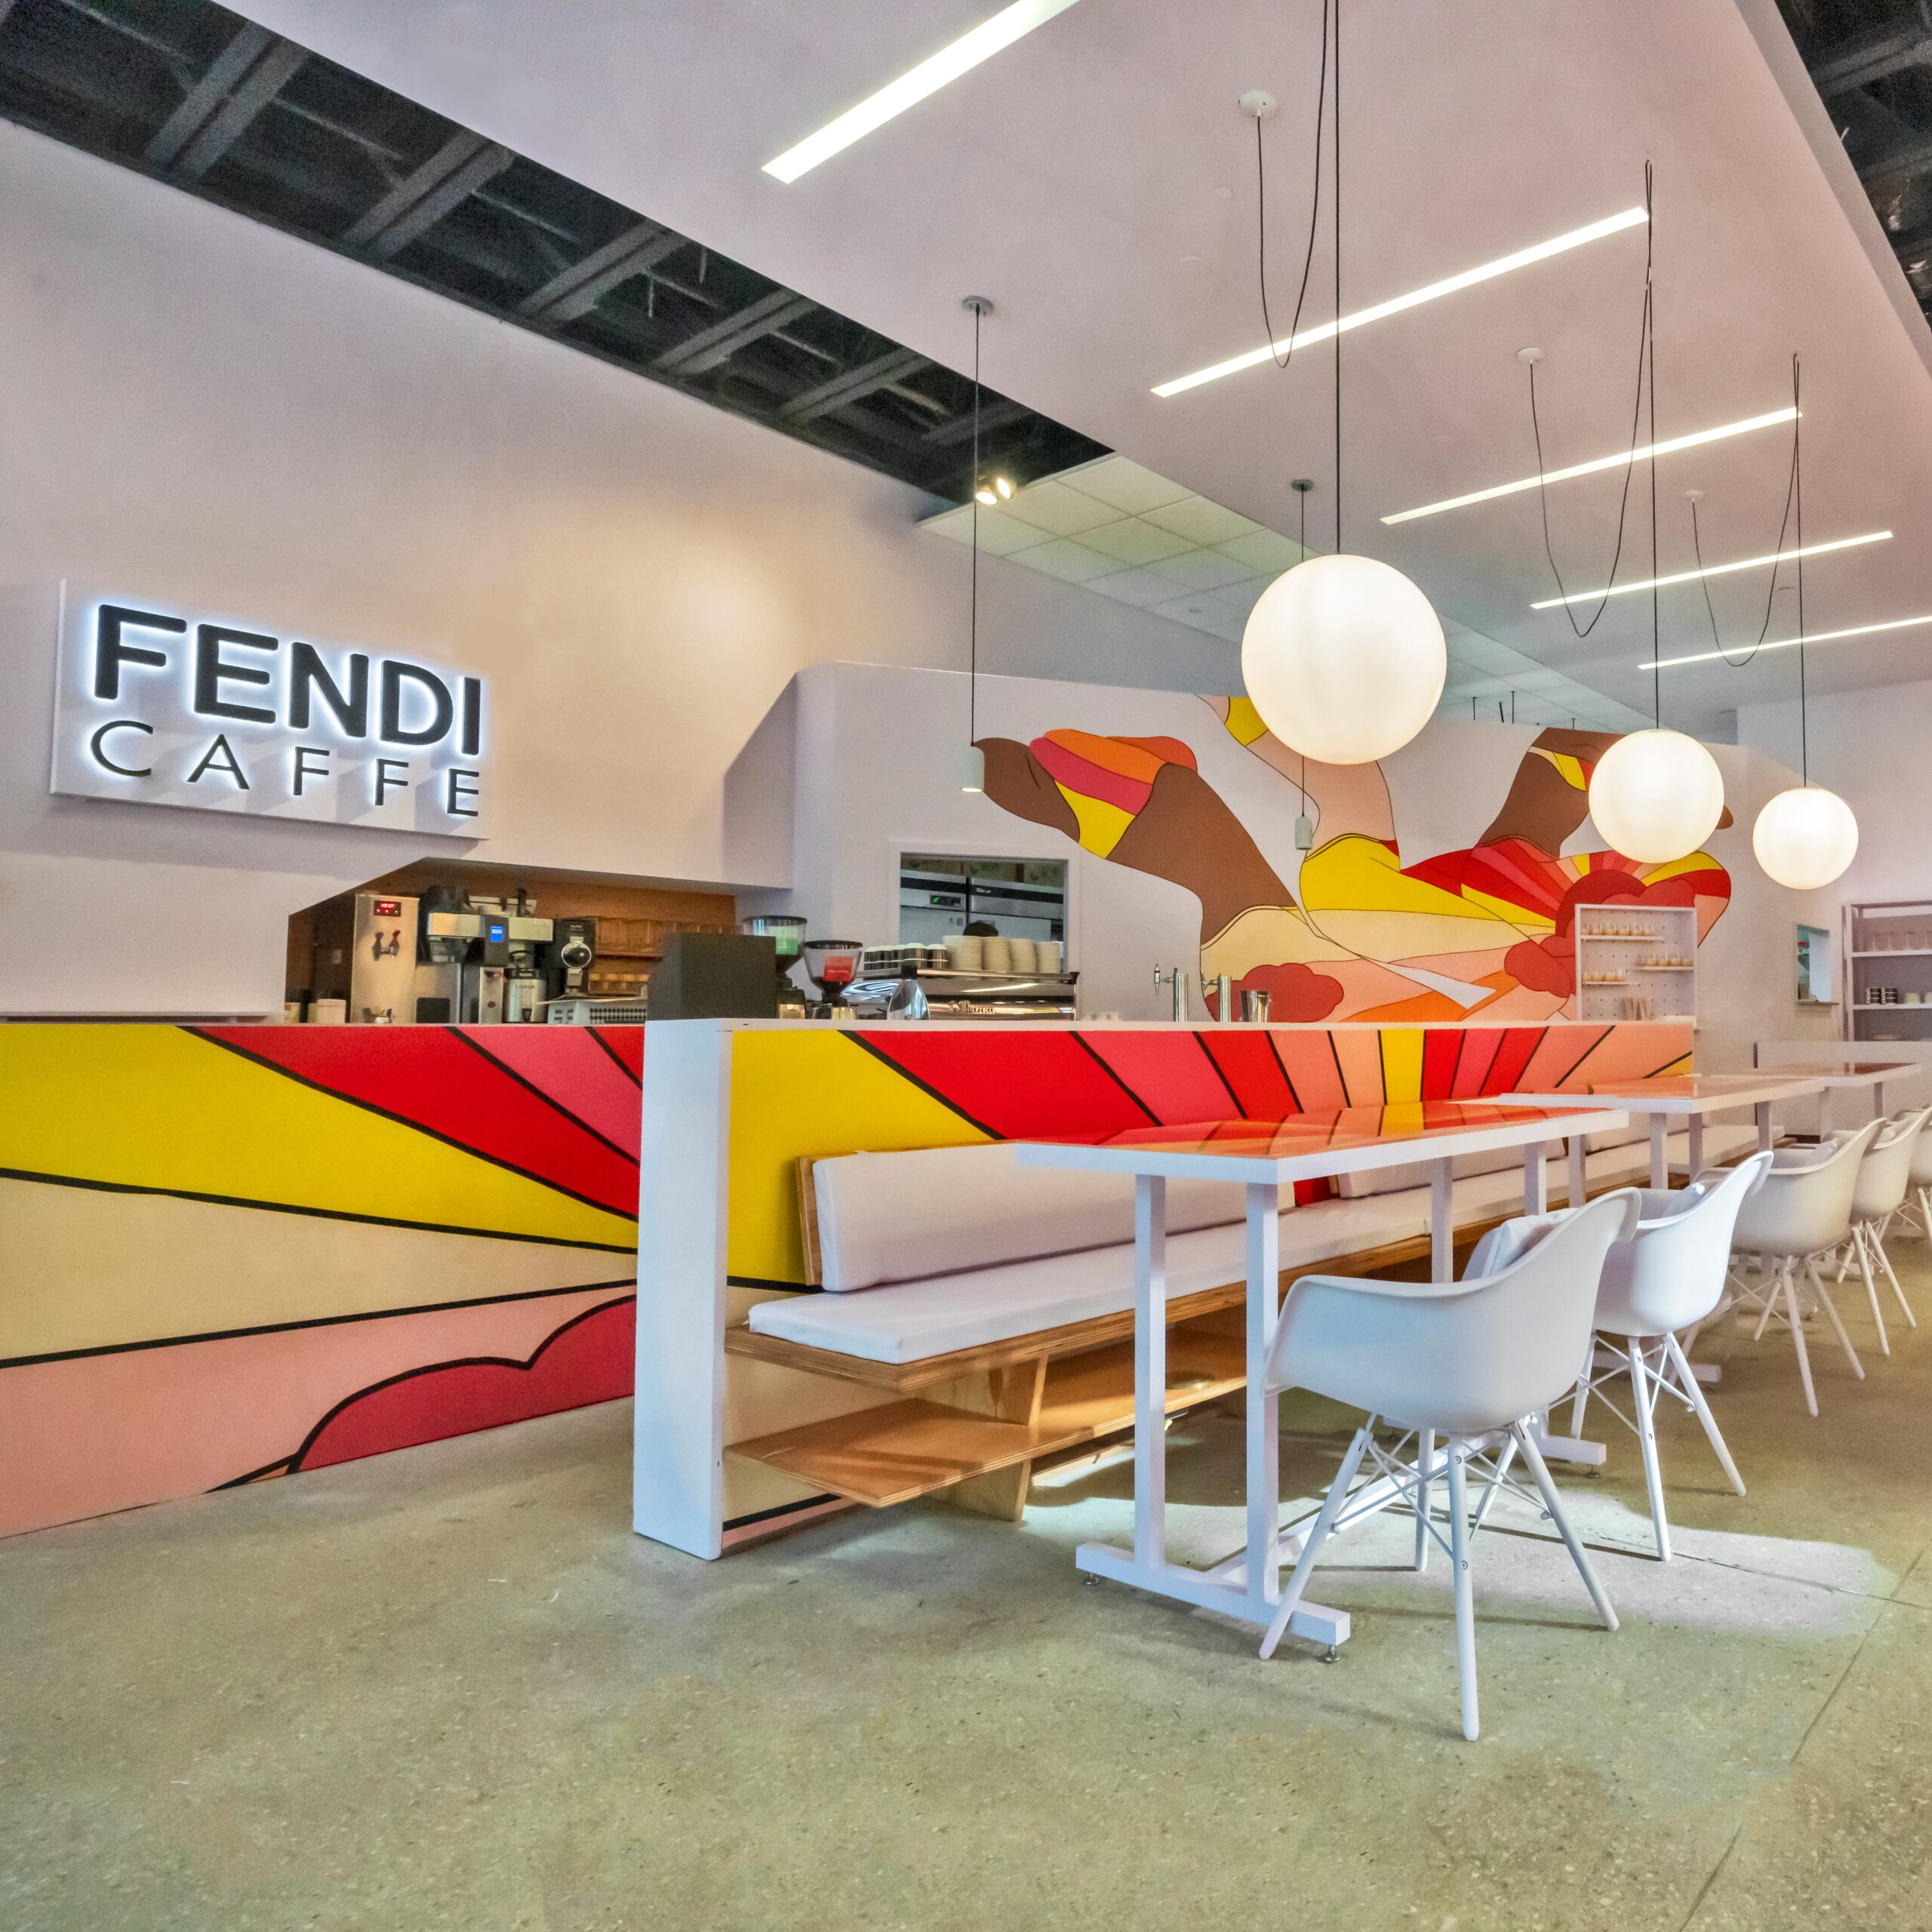 FENDI Caffe Miami via Gnazzo Group for use by 360 Magazine